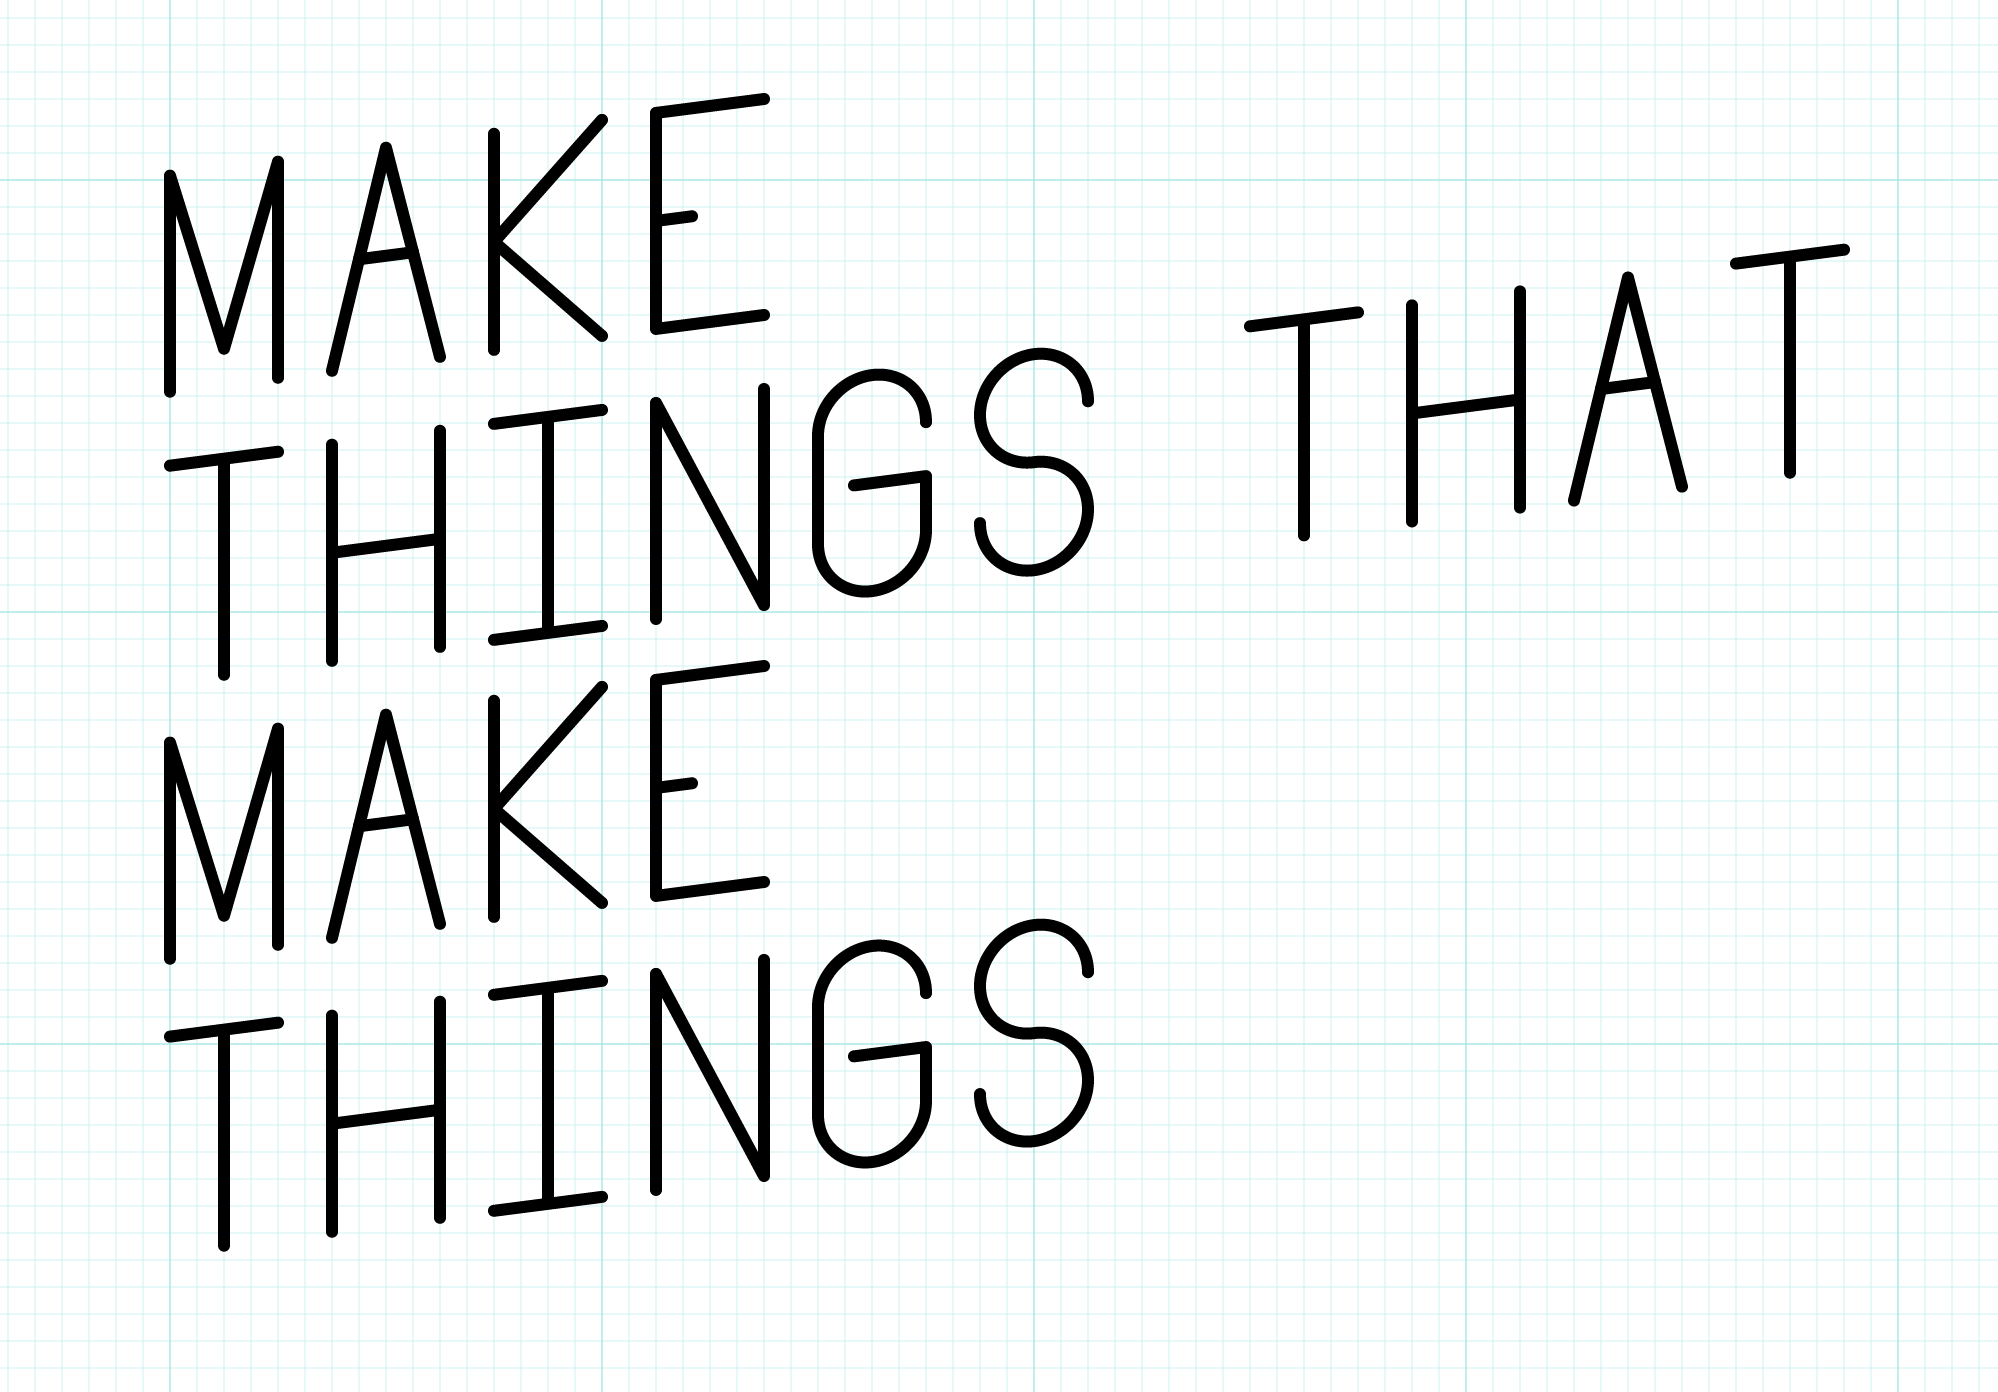 Make Things that Make Things